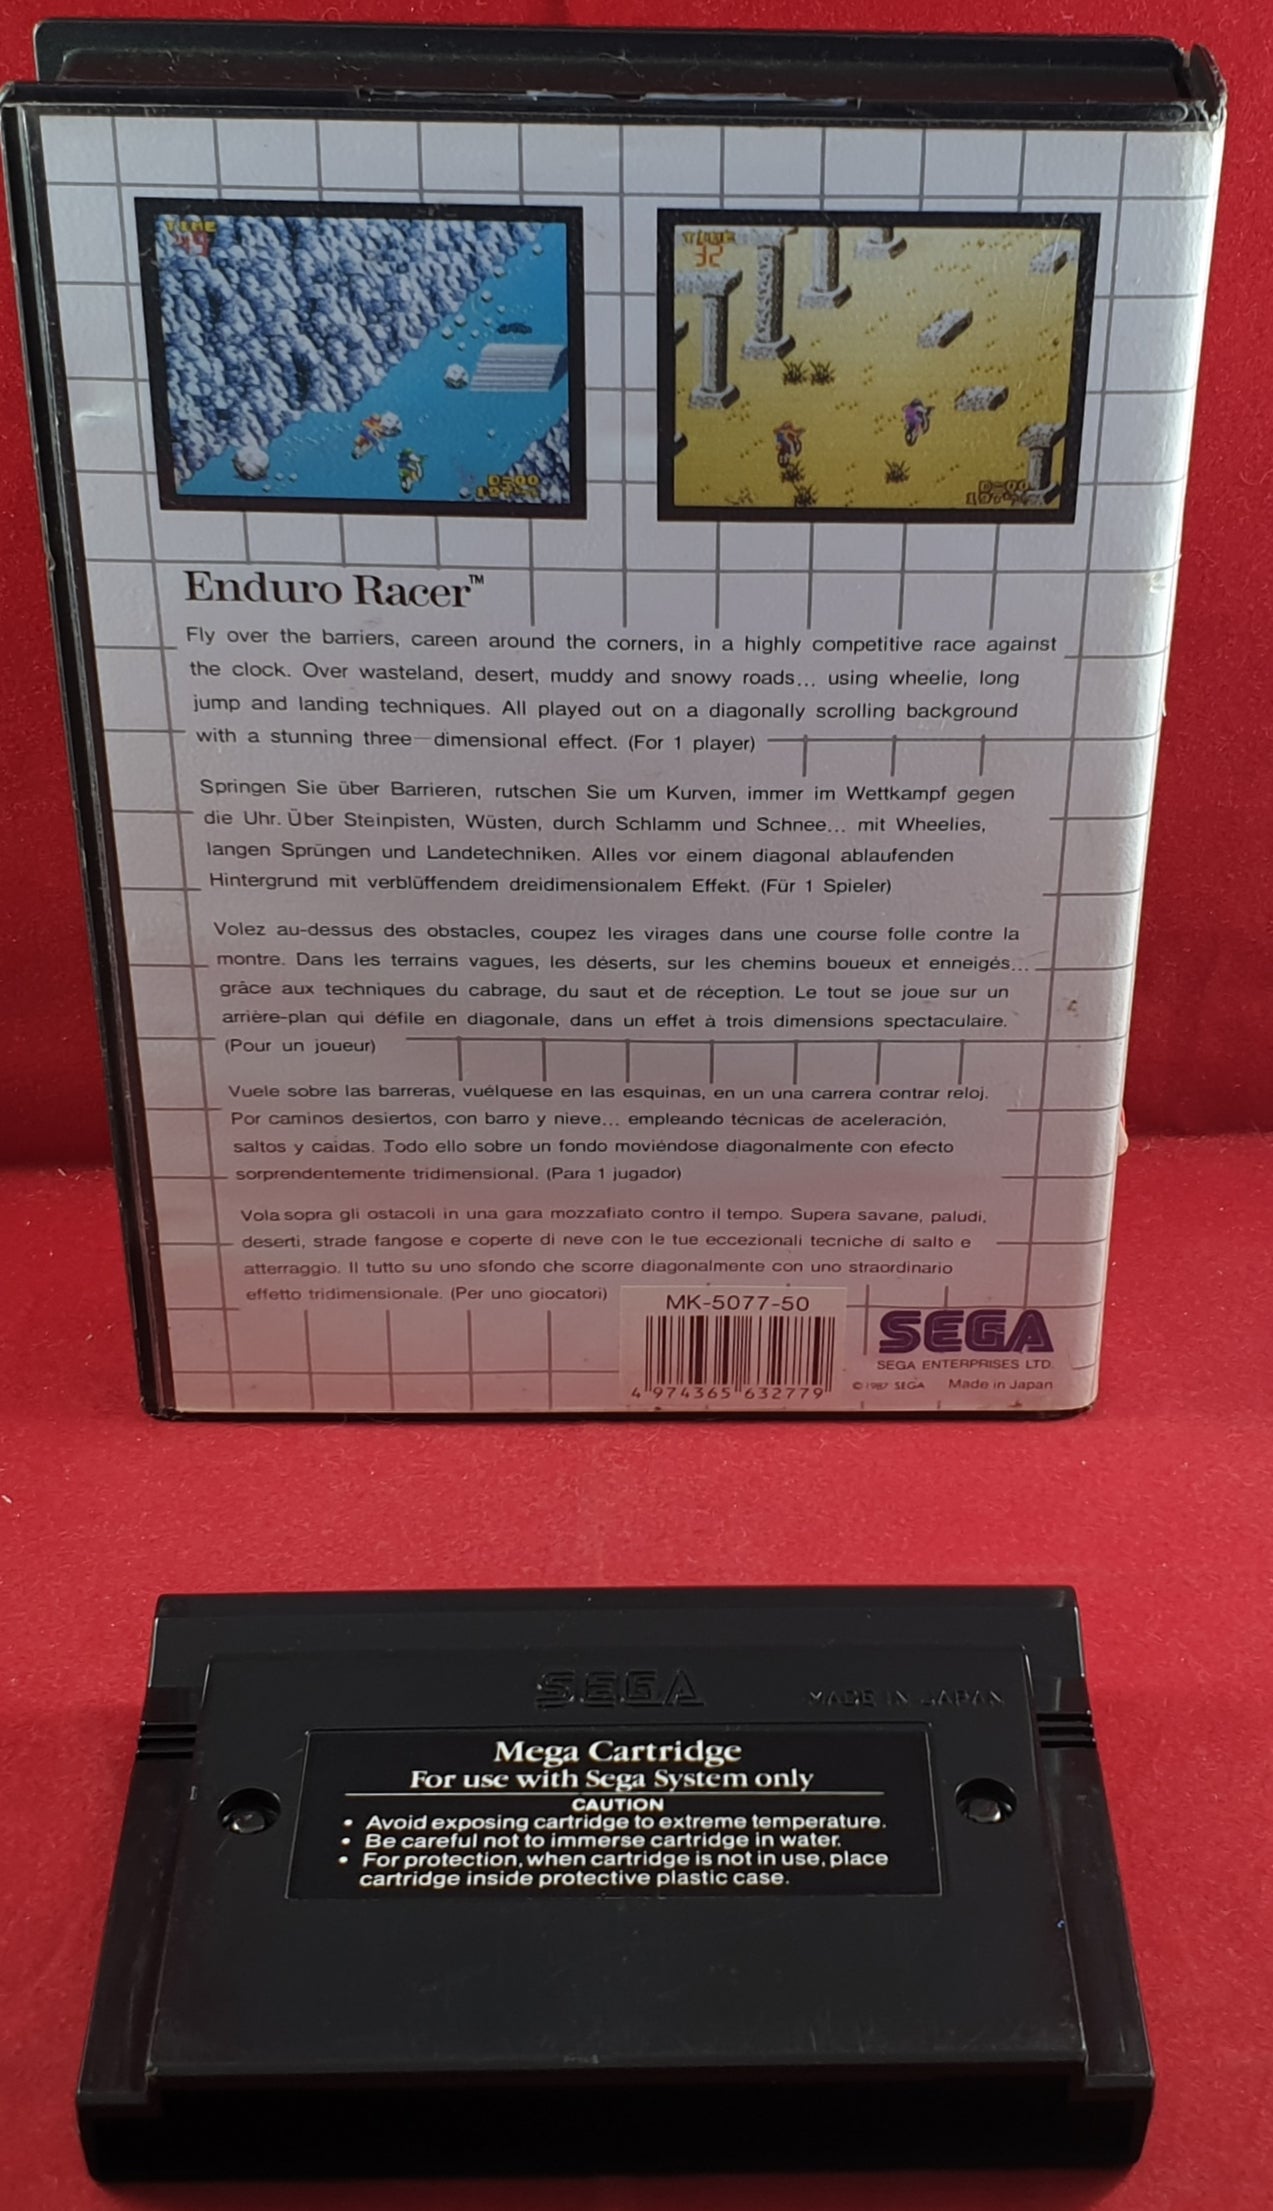 Enduro Racer Sega Master System Game